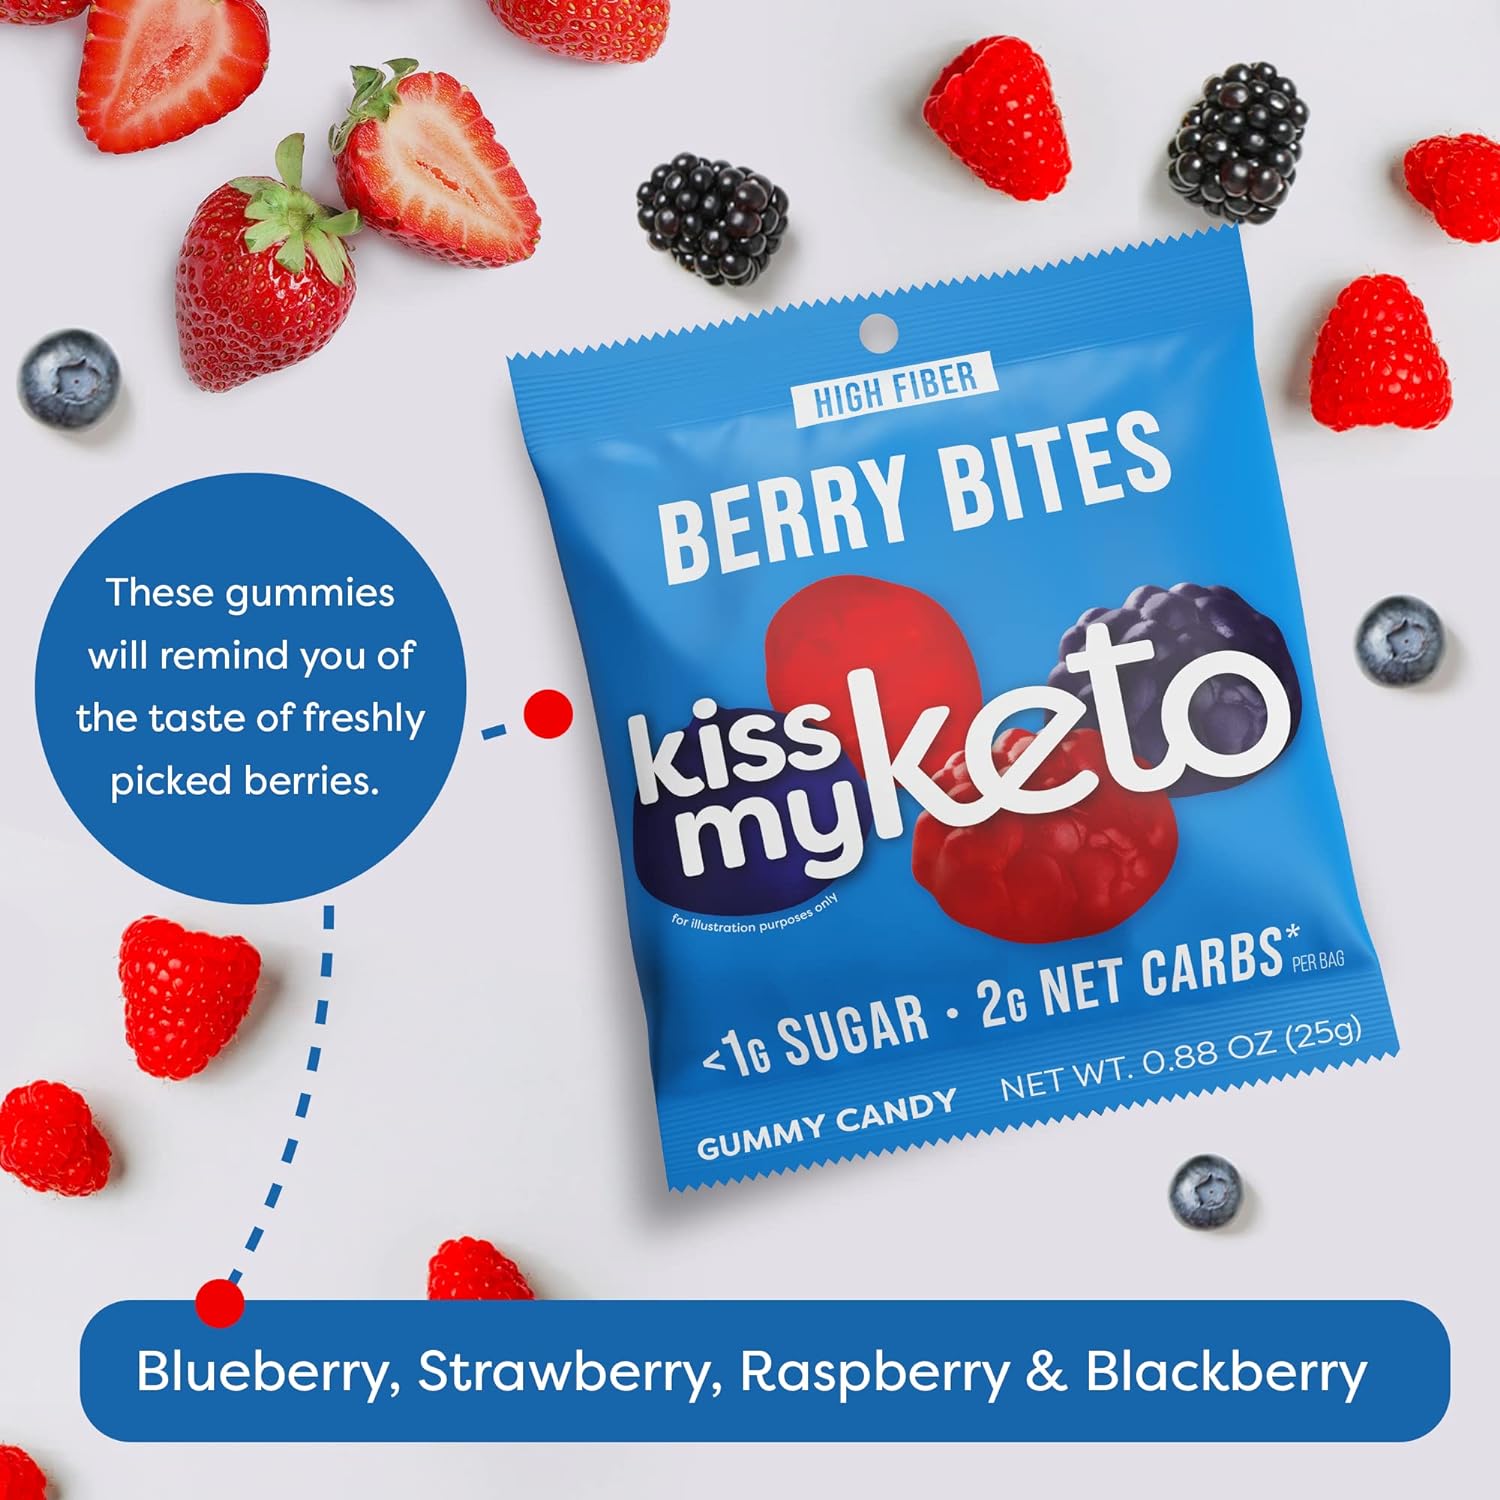 Kiss my Keto Gummies (1 bag) kiss-my-keto-gummies-1-bag Protein Snacks Berry BItes KissMyKeto